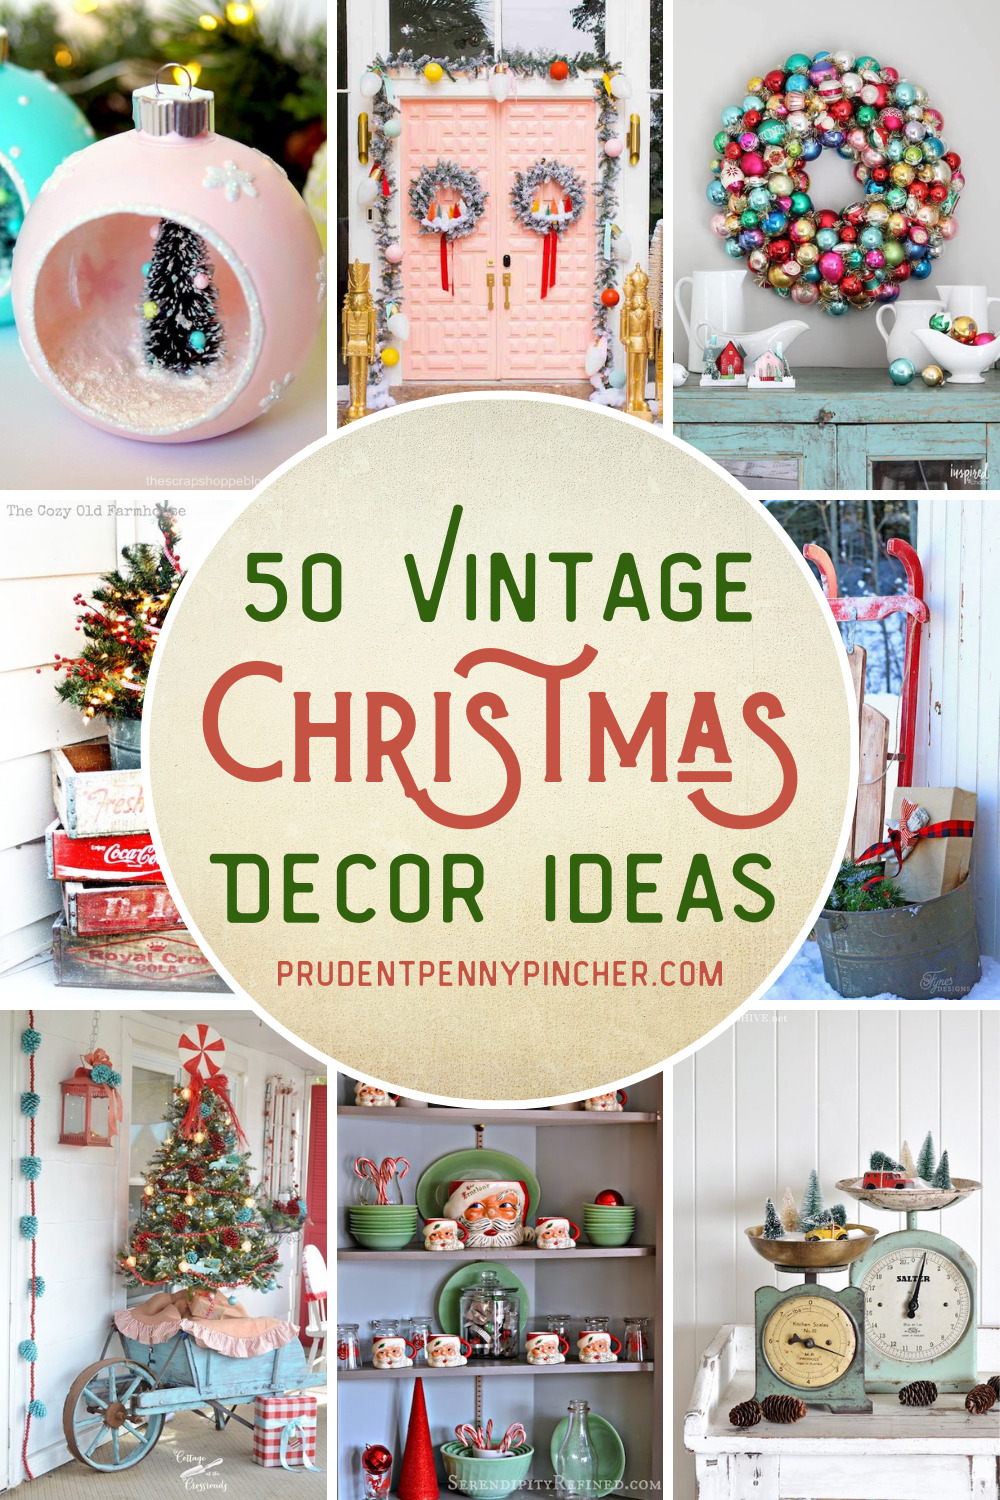 50 Vintage Christmas Decor Ideas - Prudent Penny Pincher